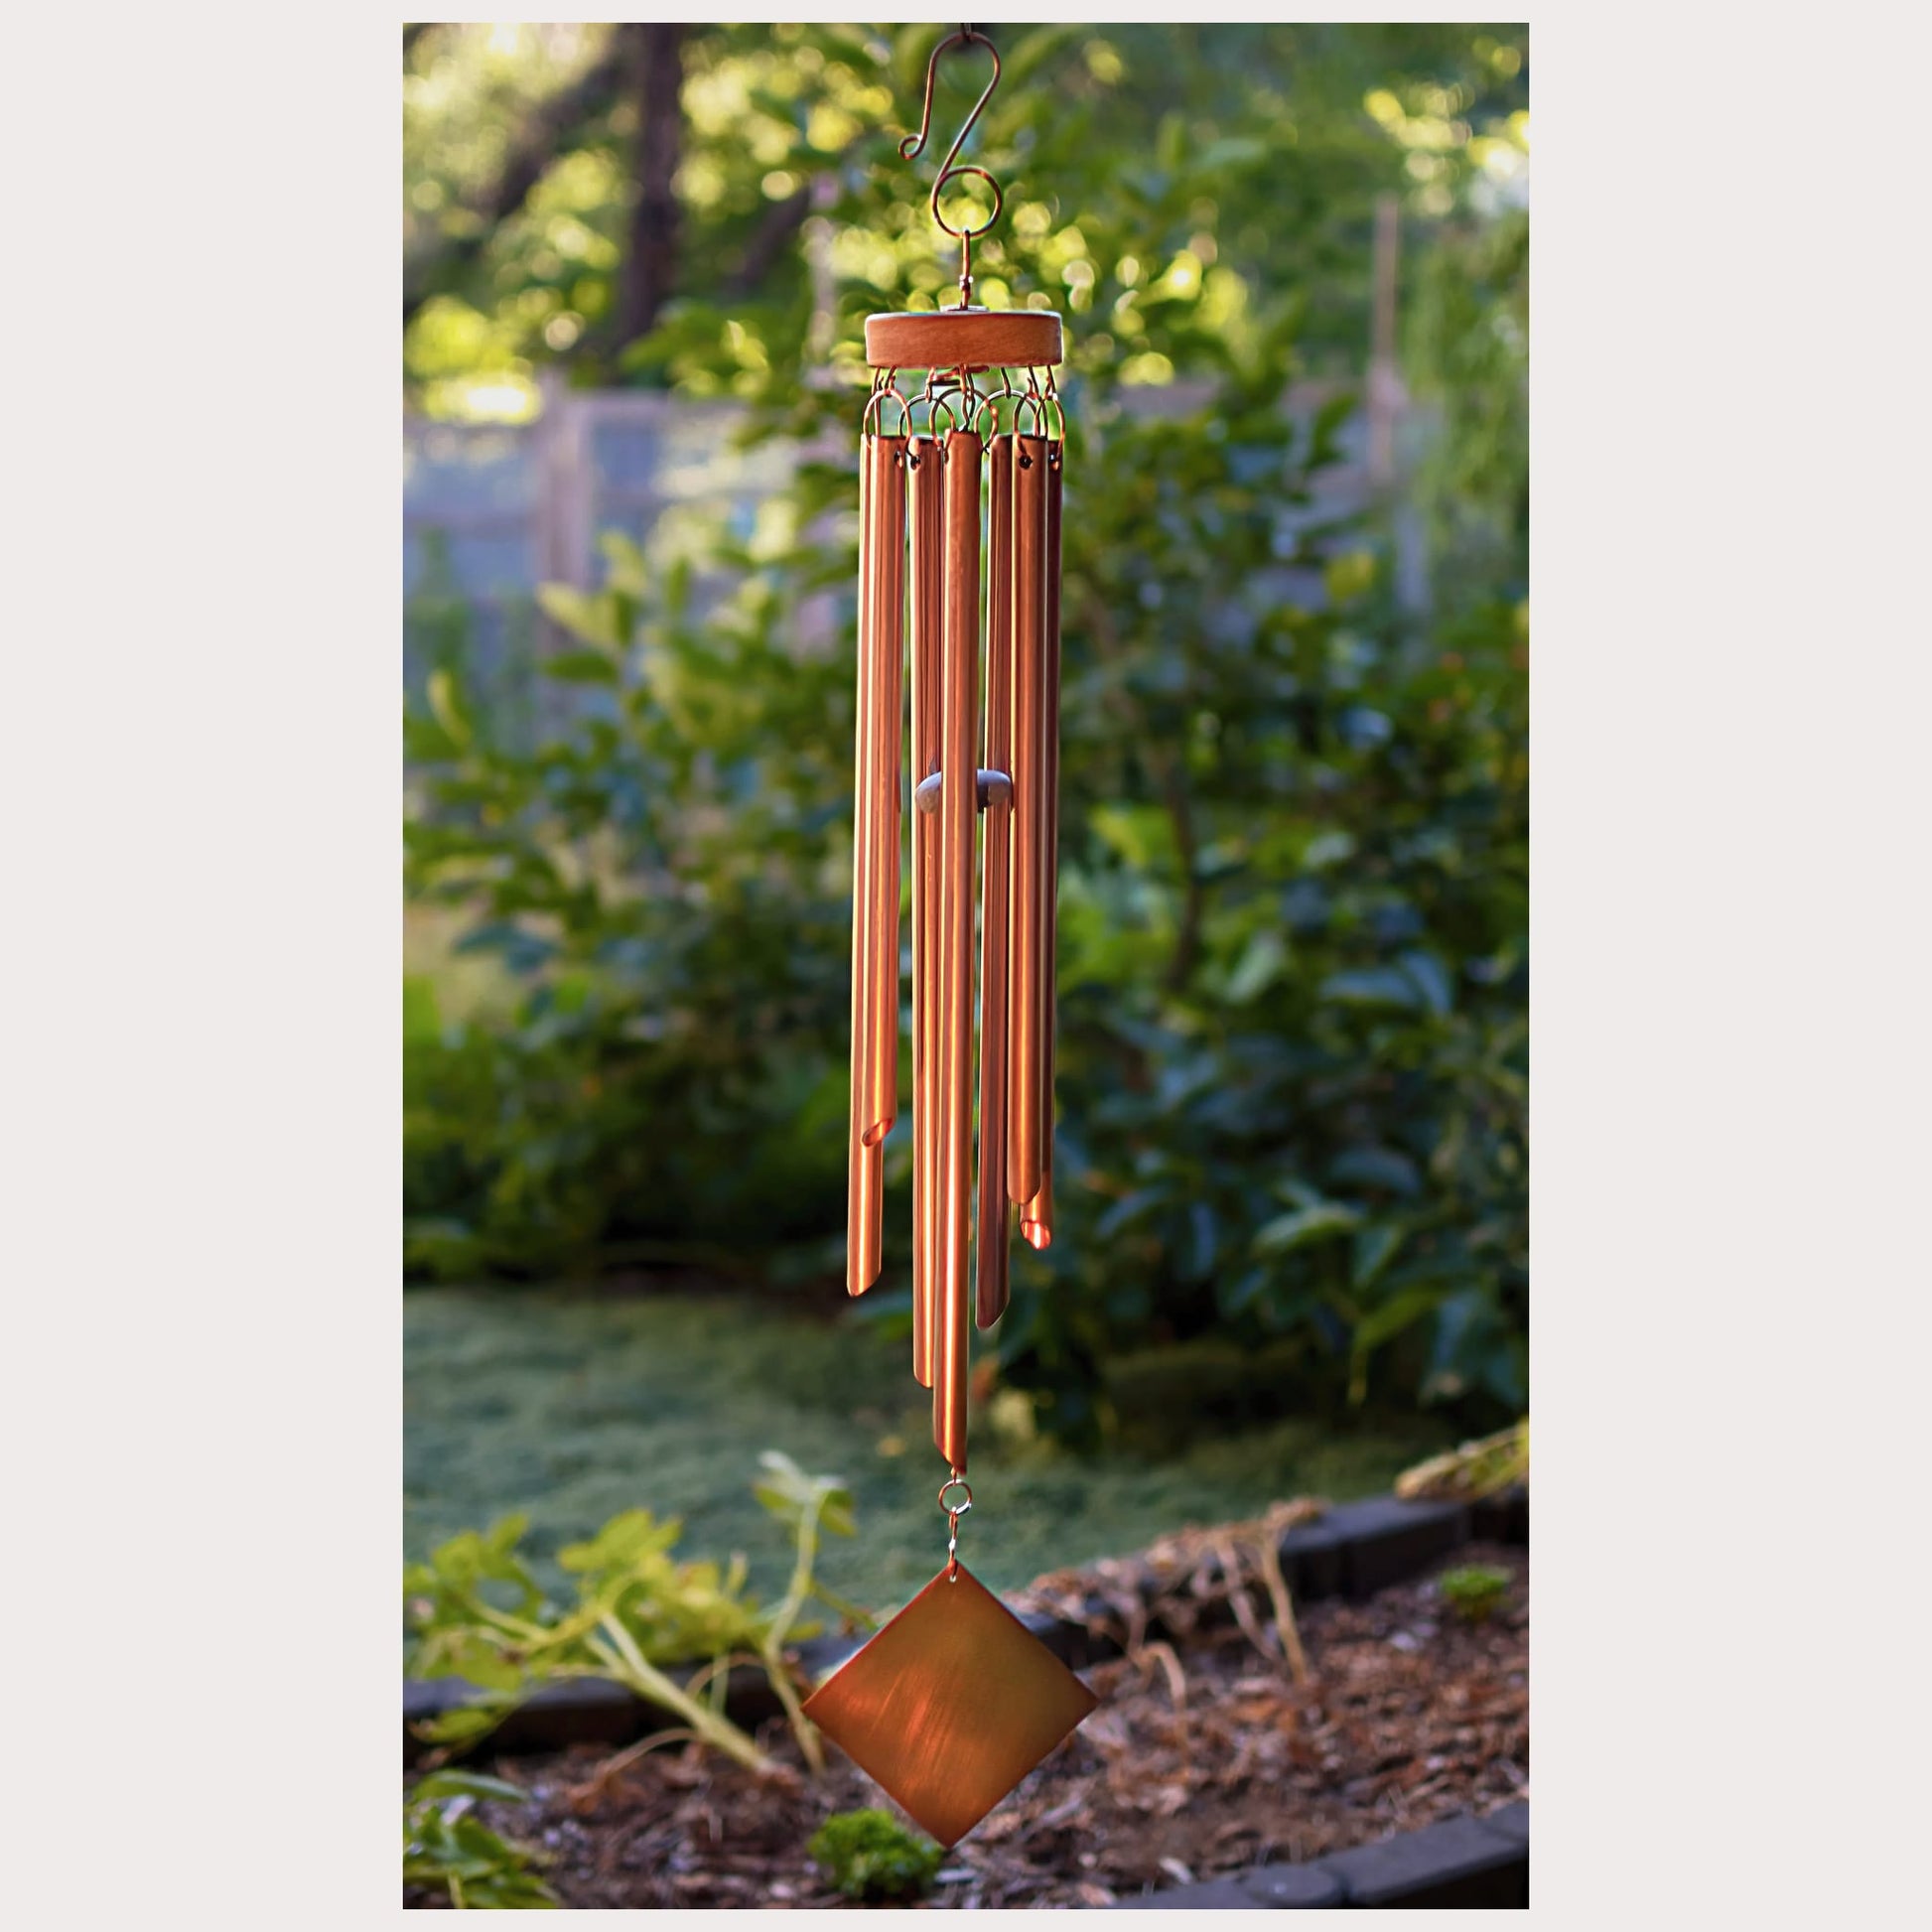 Copper wind chime